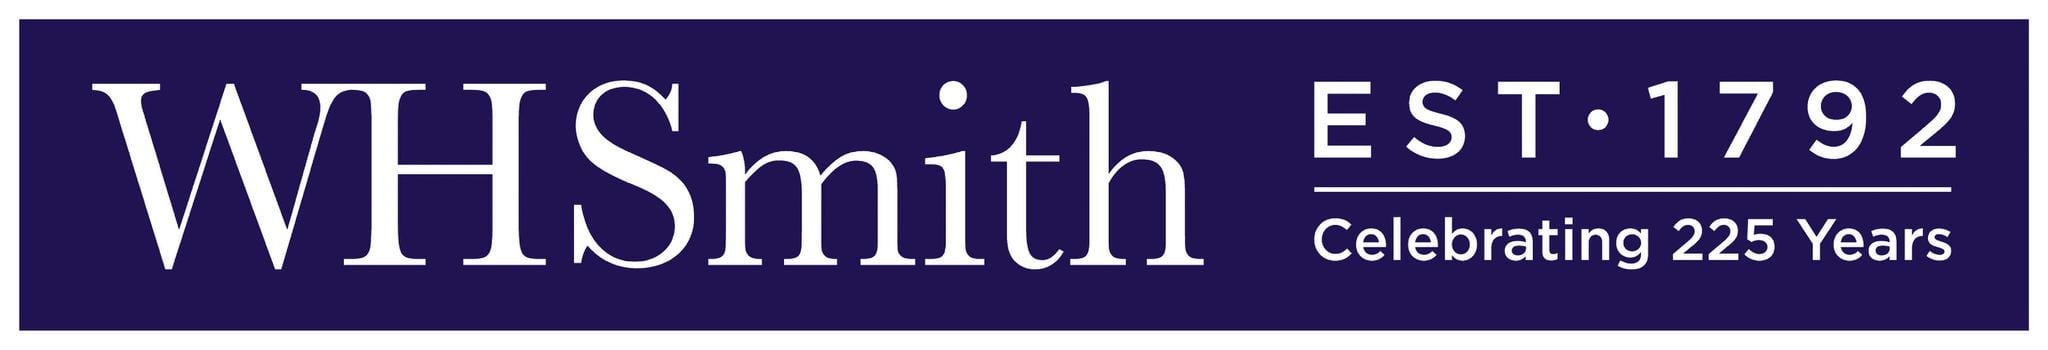 WHSmith Logo - Books By WHSmith| BBC Good Food Show